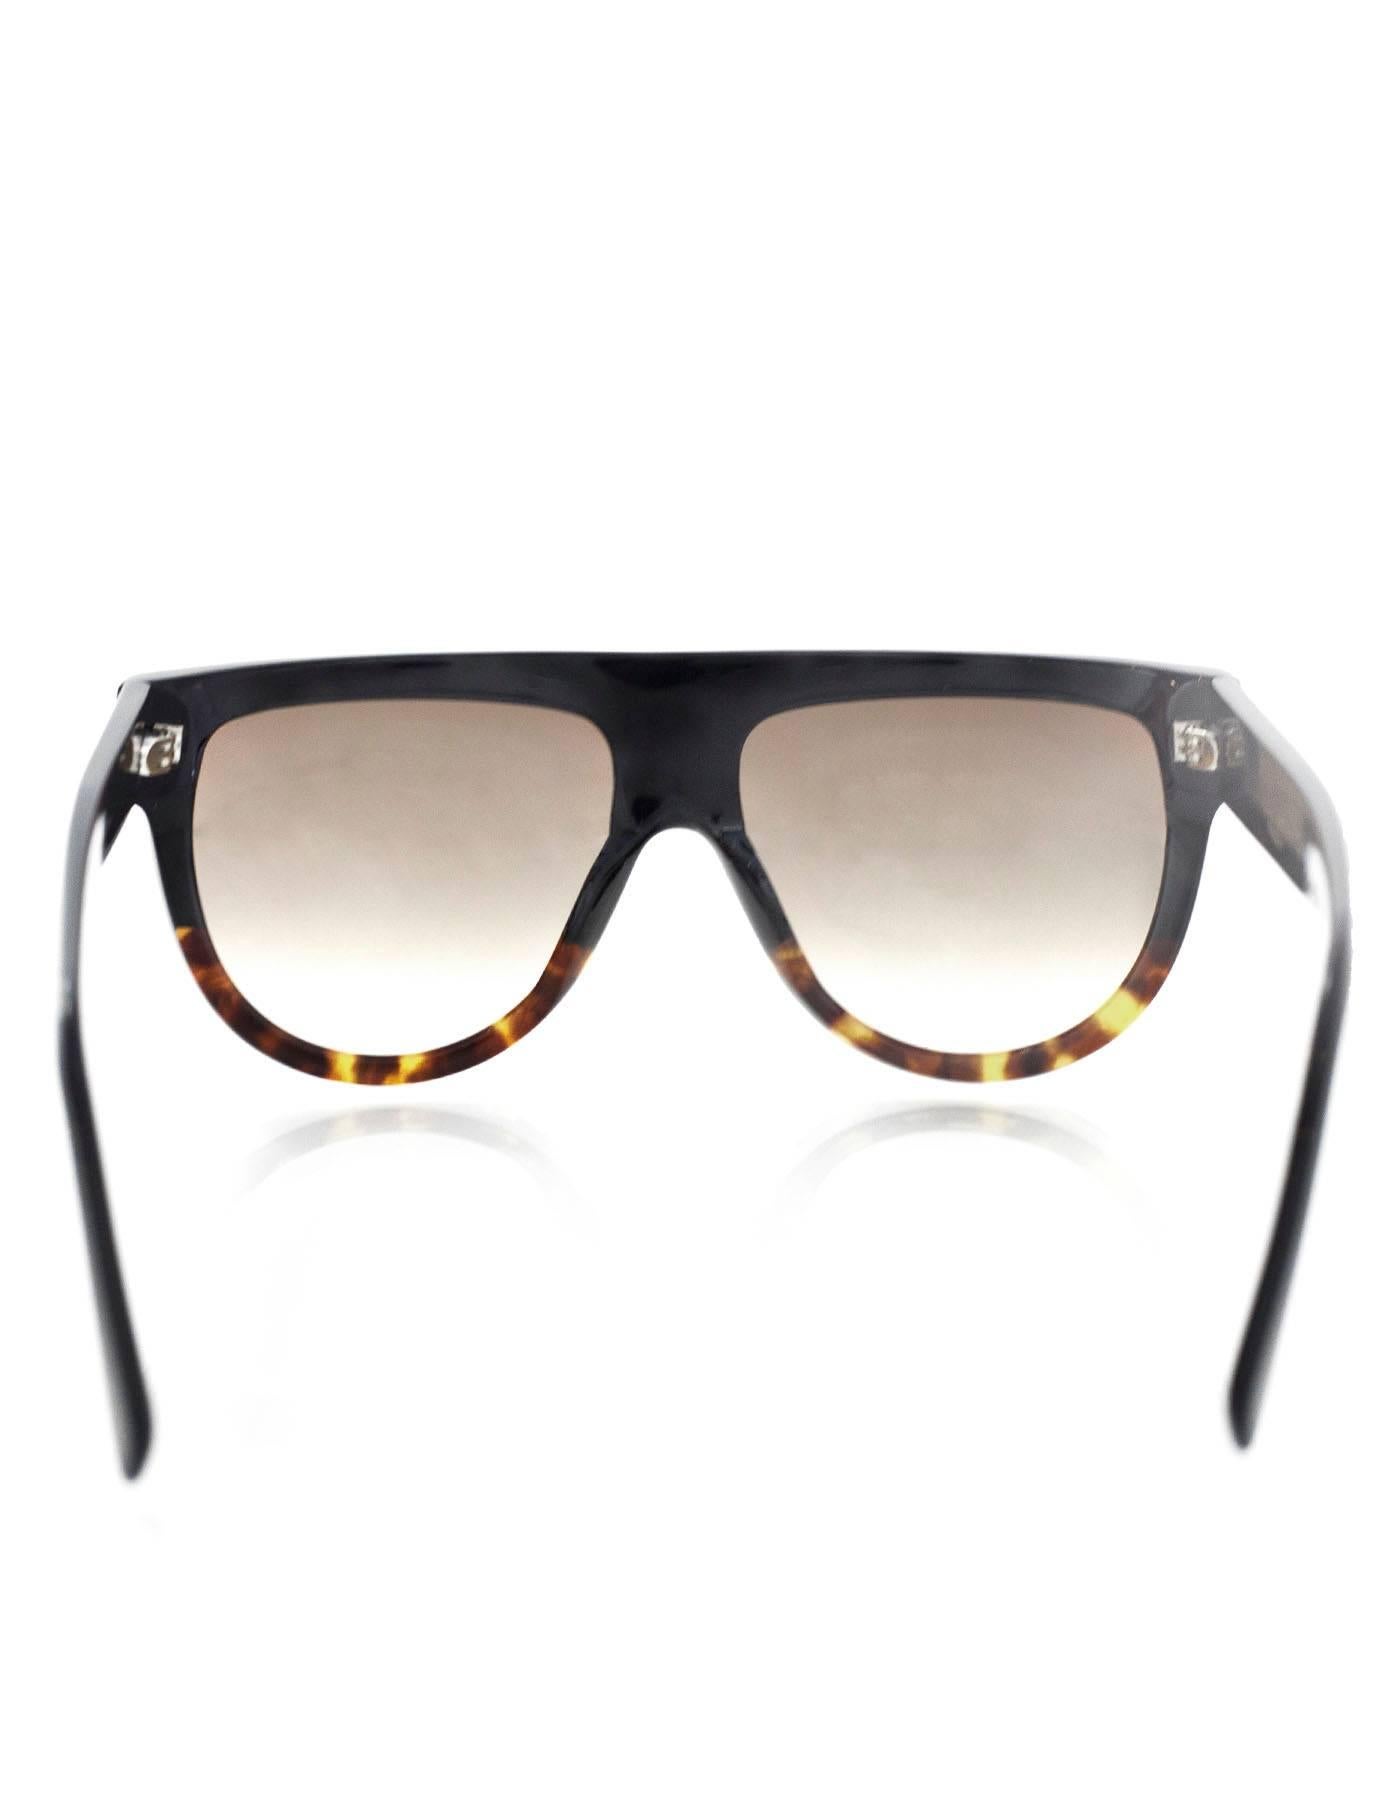 Beige Celine Shadow Flat Top Sunglasses with Case